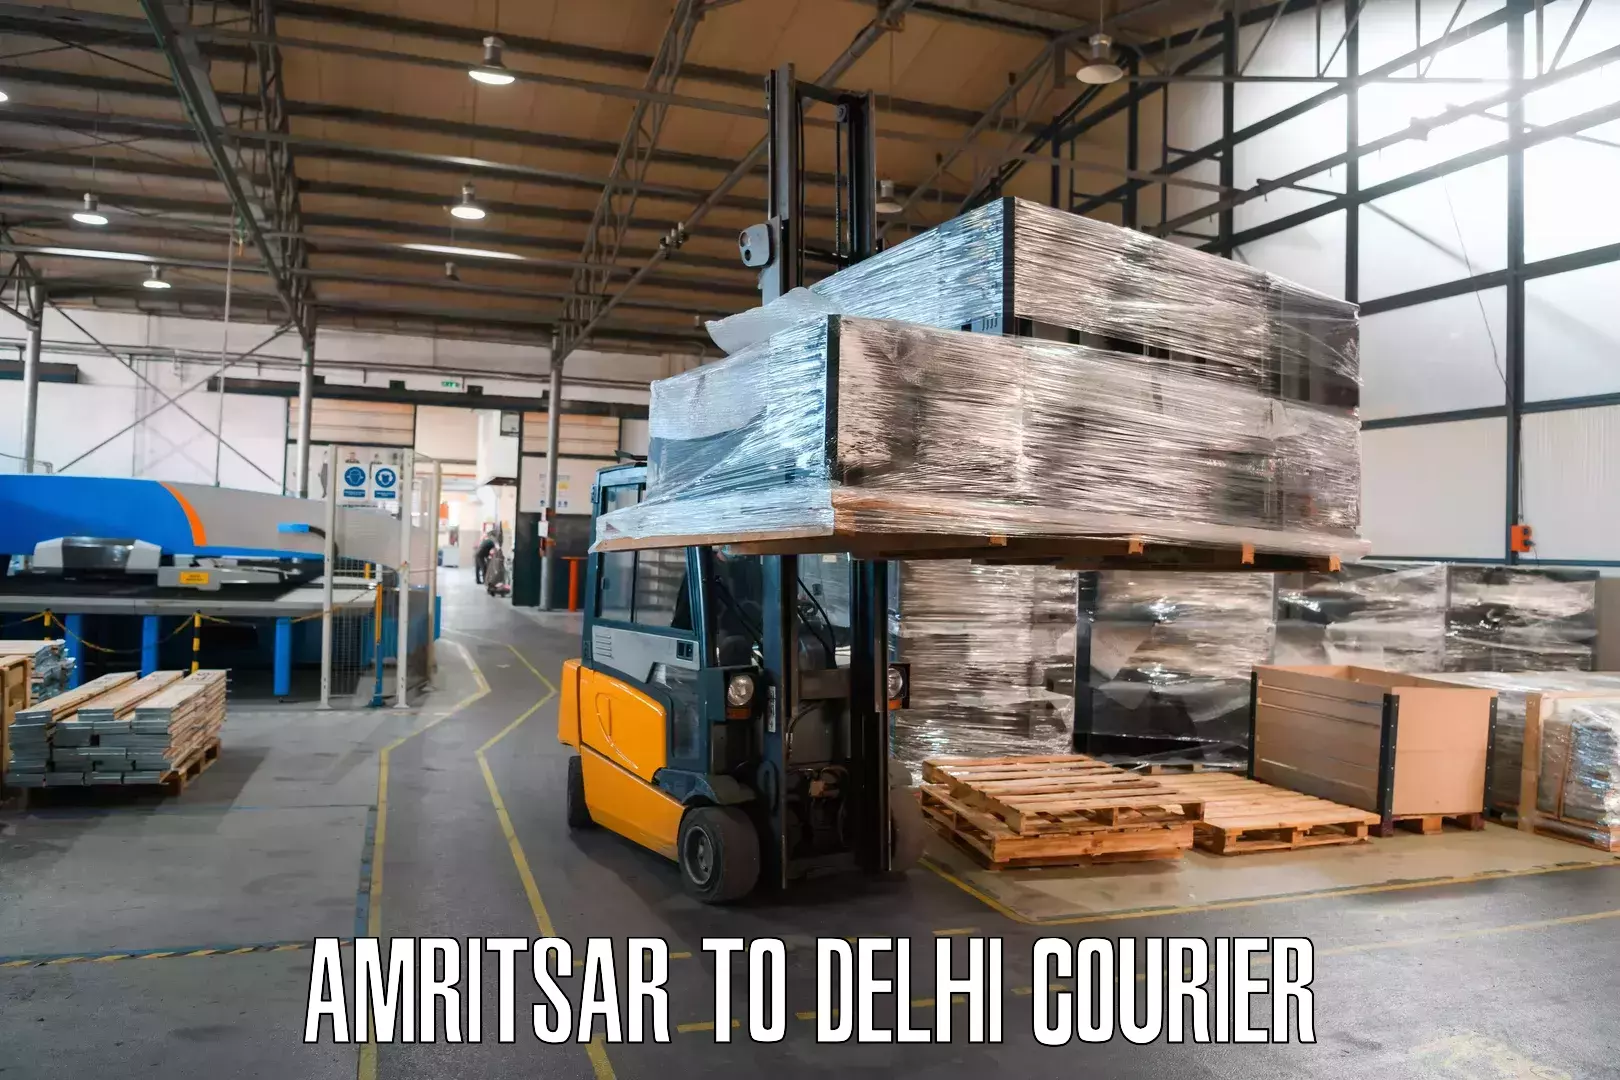 Courier service innovation Amritsar to Delhi